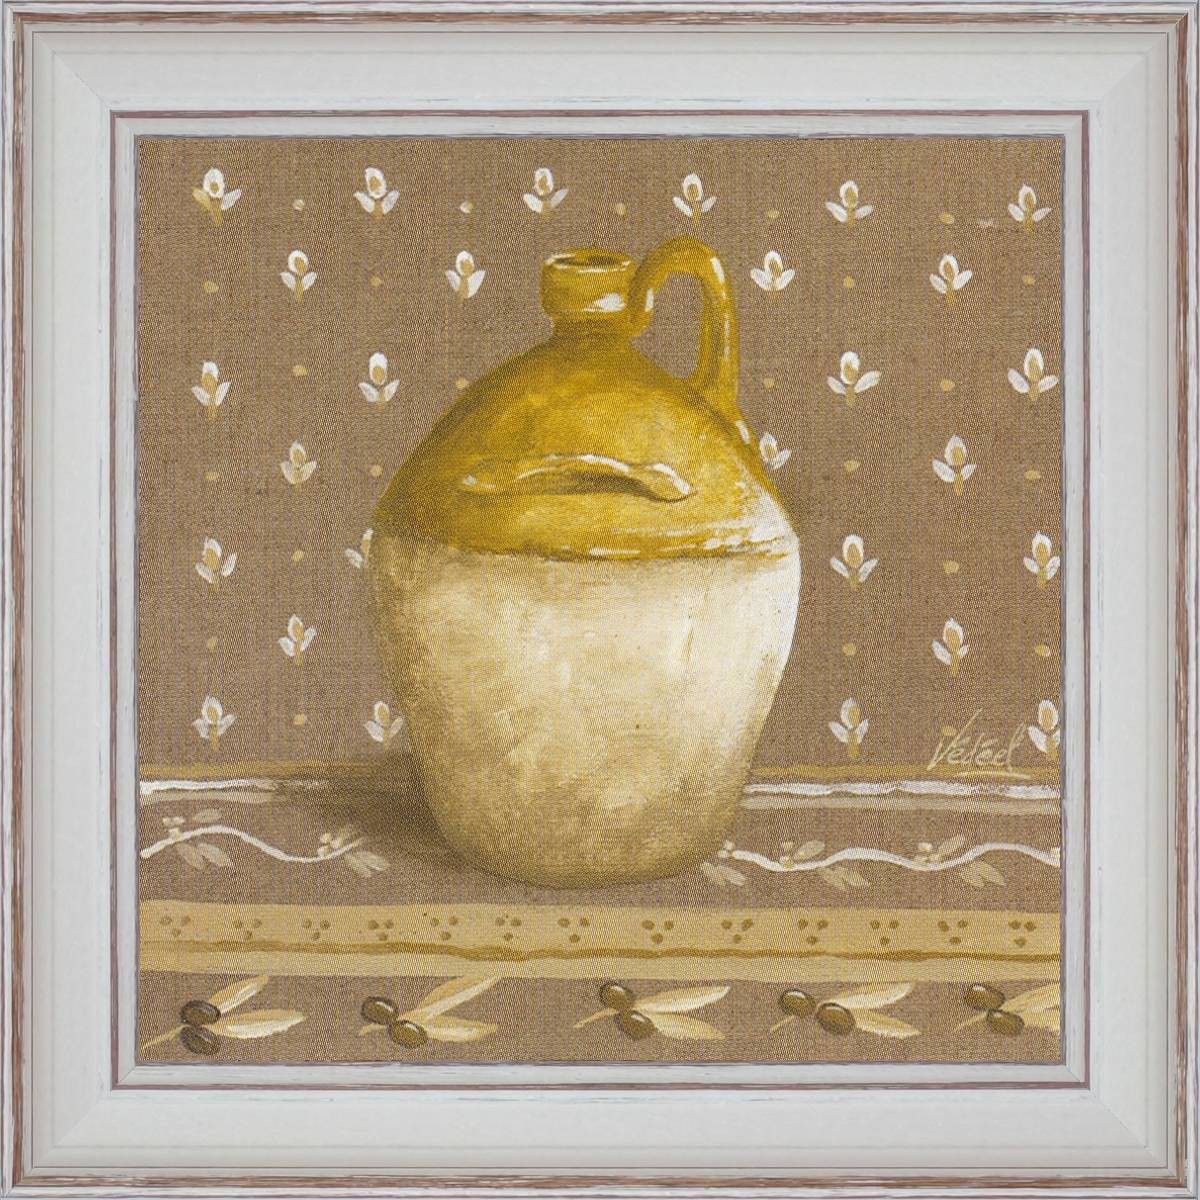 Yellow jug - painting detail 40 x 40 cm